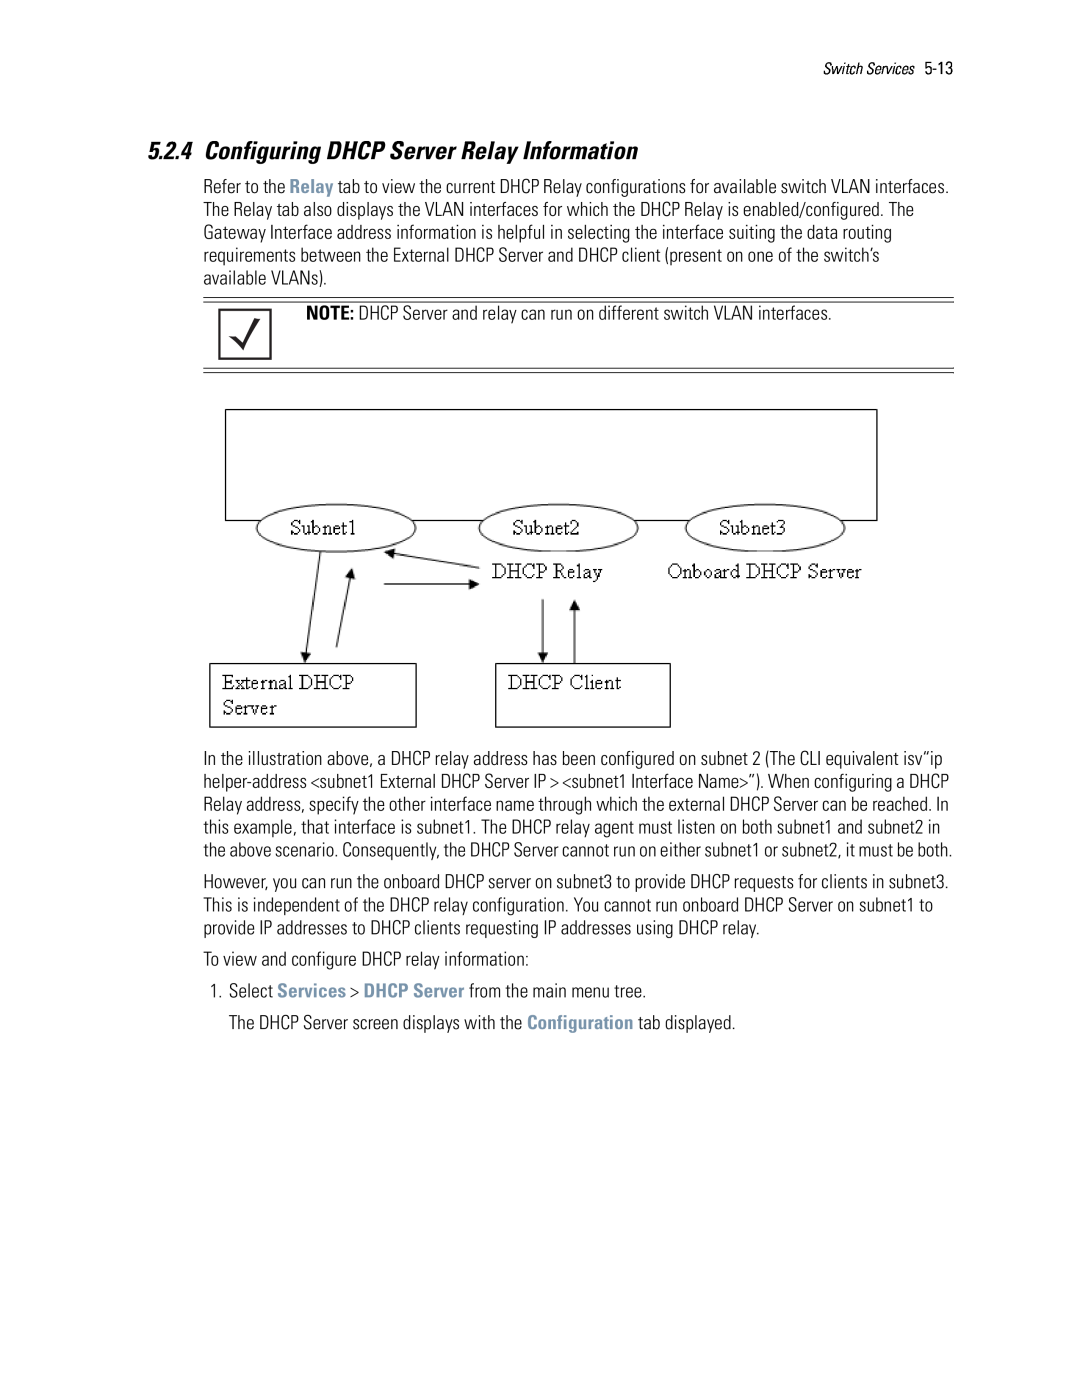 Motorola WS5100 manual Configuring DHCP Server Relay Information 